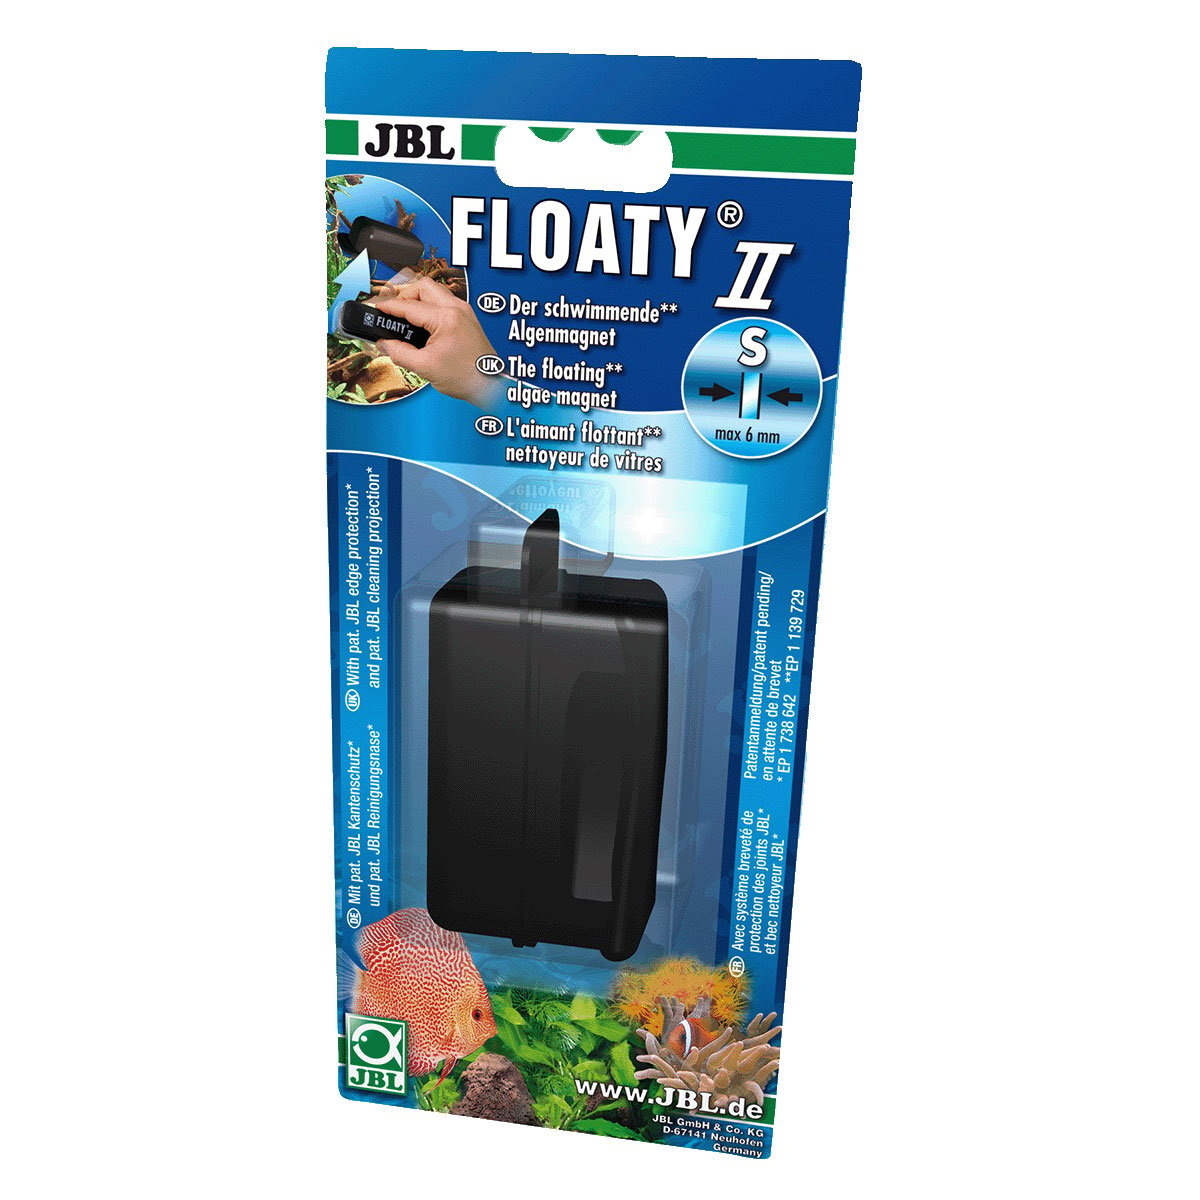 JBL Floaty II S - Der schwimmende Algenmagnet von JBL